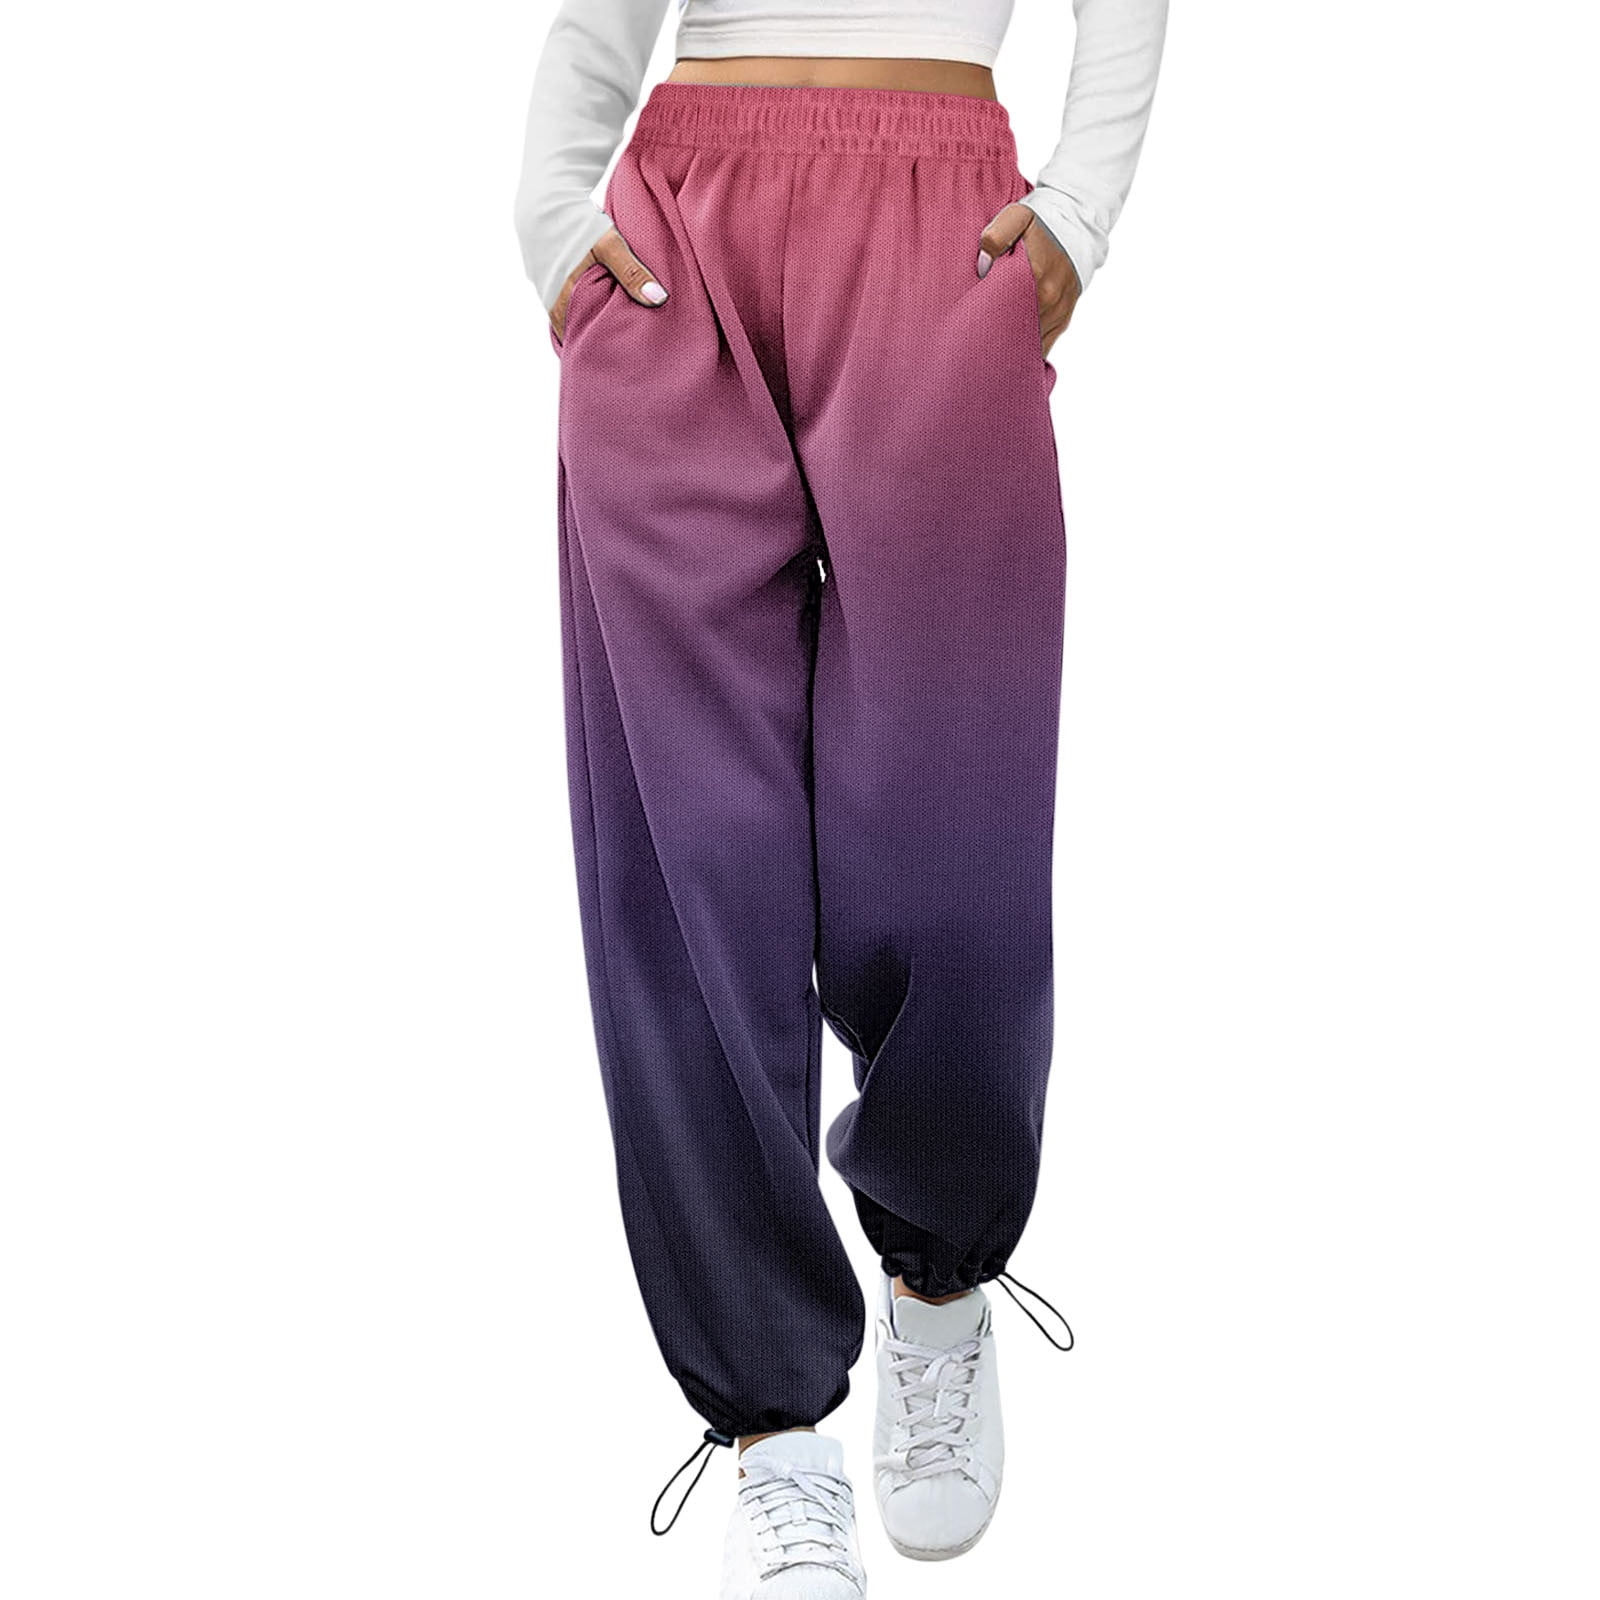 TOWED22 Petite Sweatpants for Women,Women's Cotton Sweatpants High Waist  Joggers Pant Workout Yoga Jogger Pants with Pockets G,XL